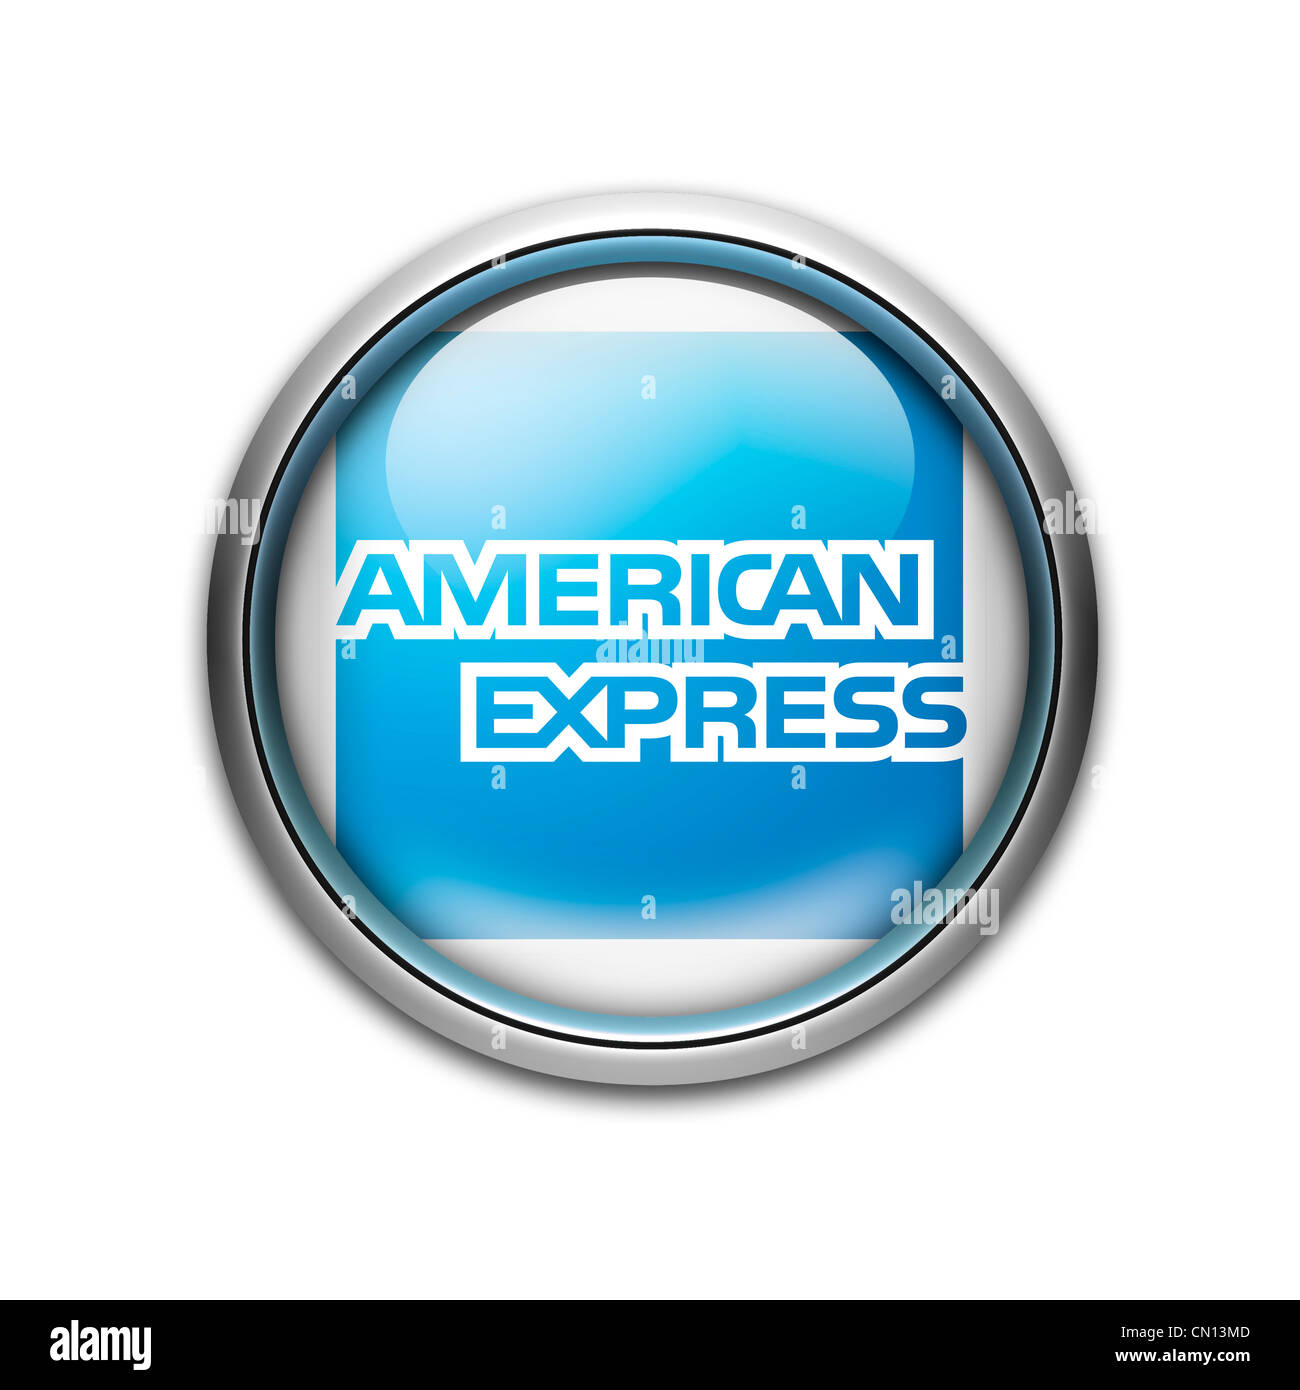 American Express Stock Photo